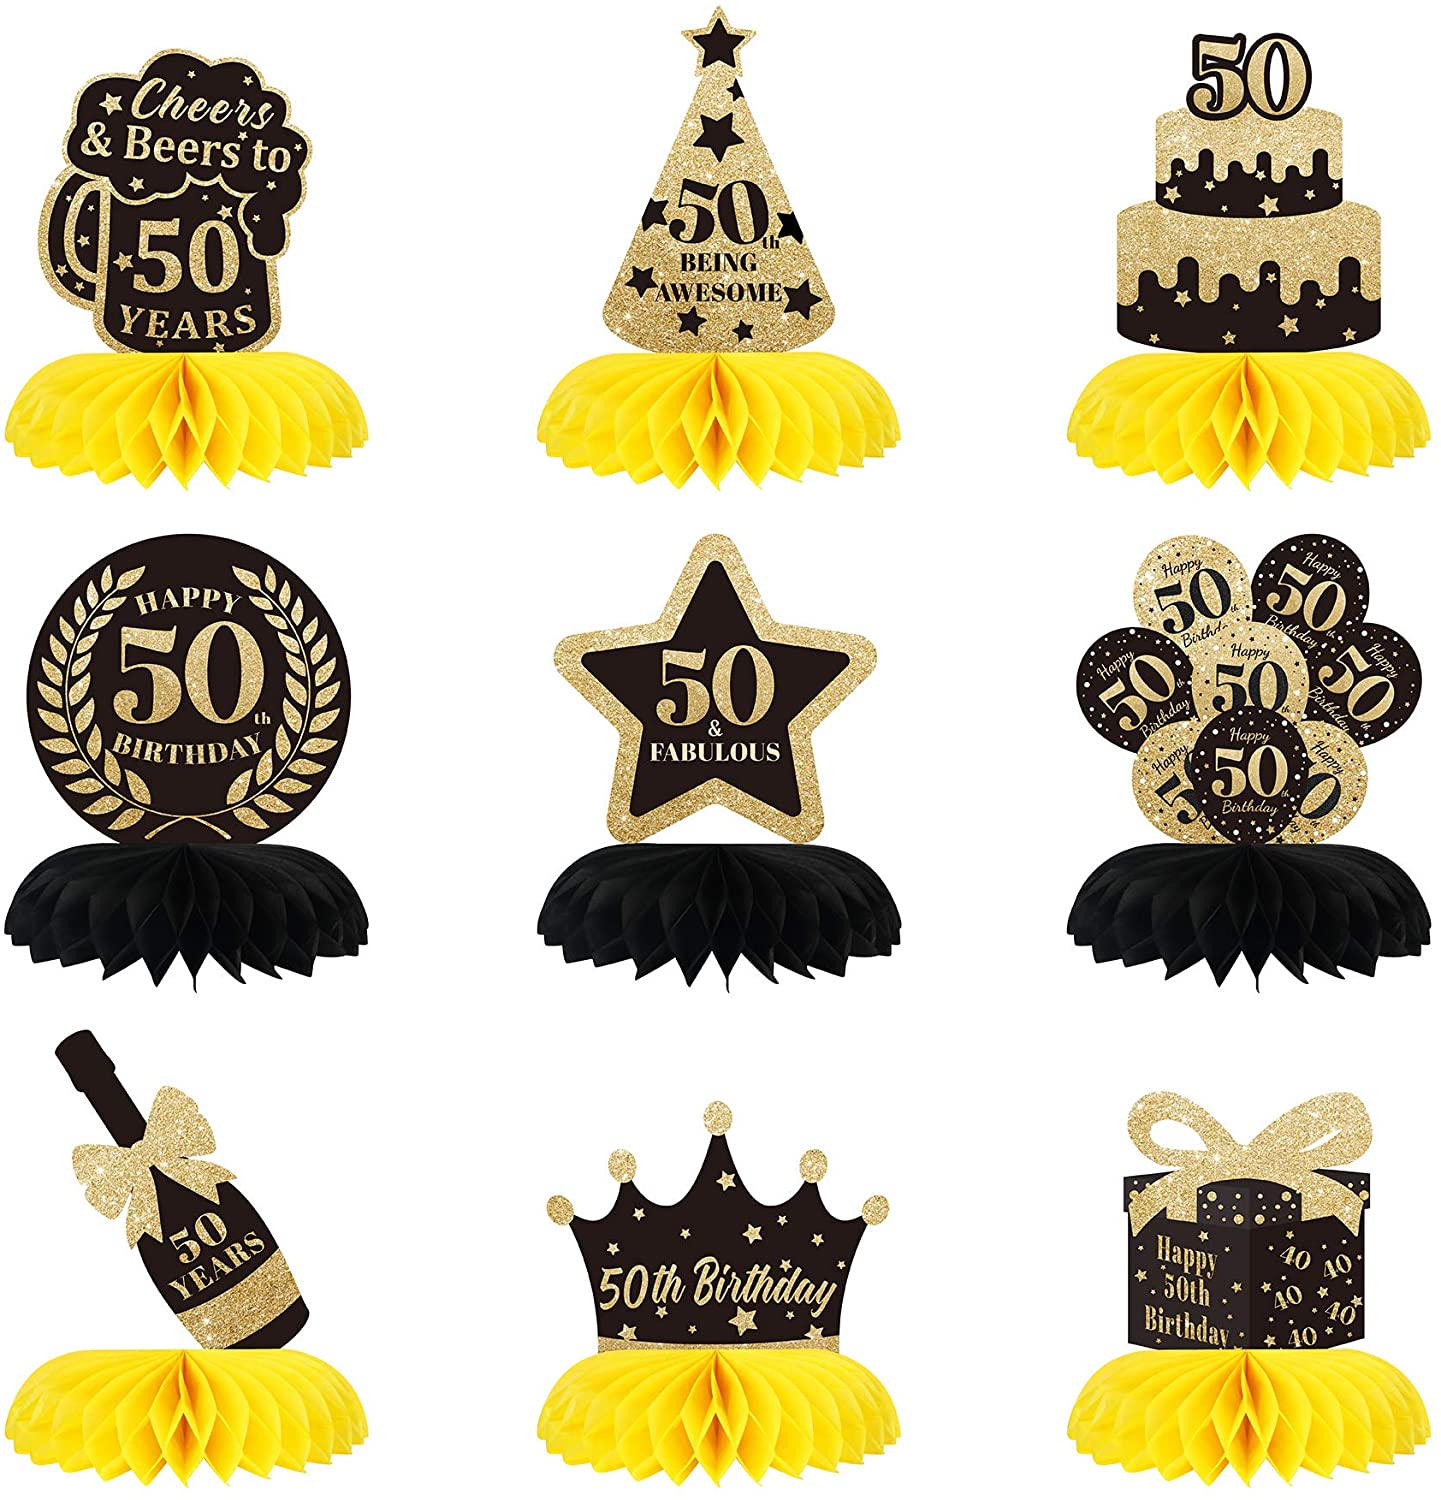 50th birthday centerpieces